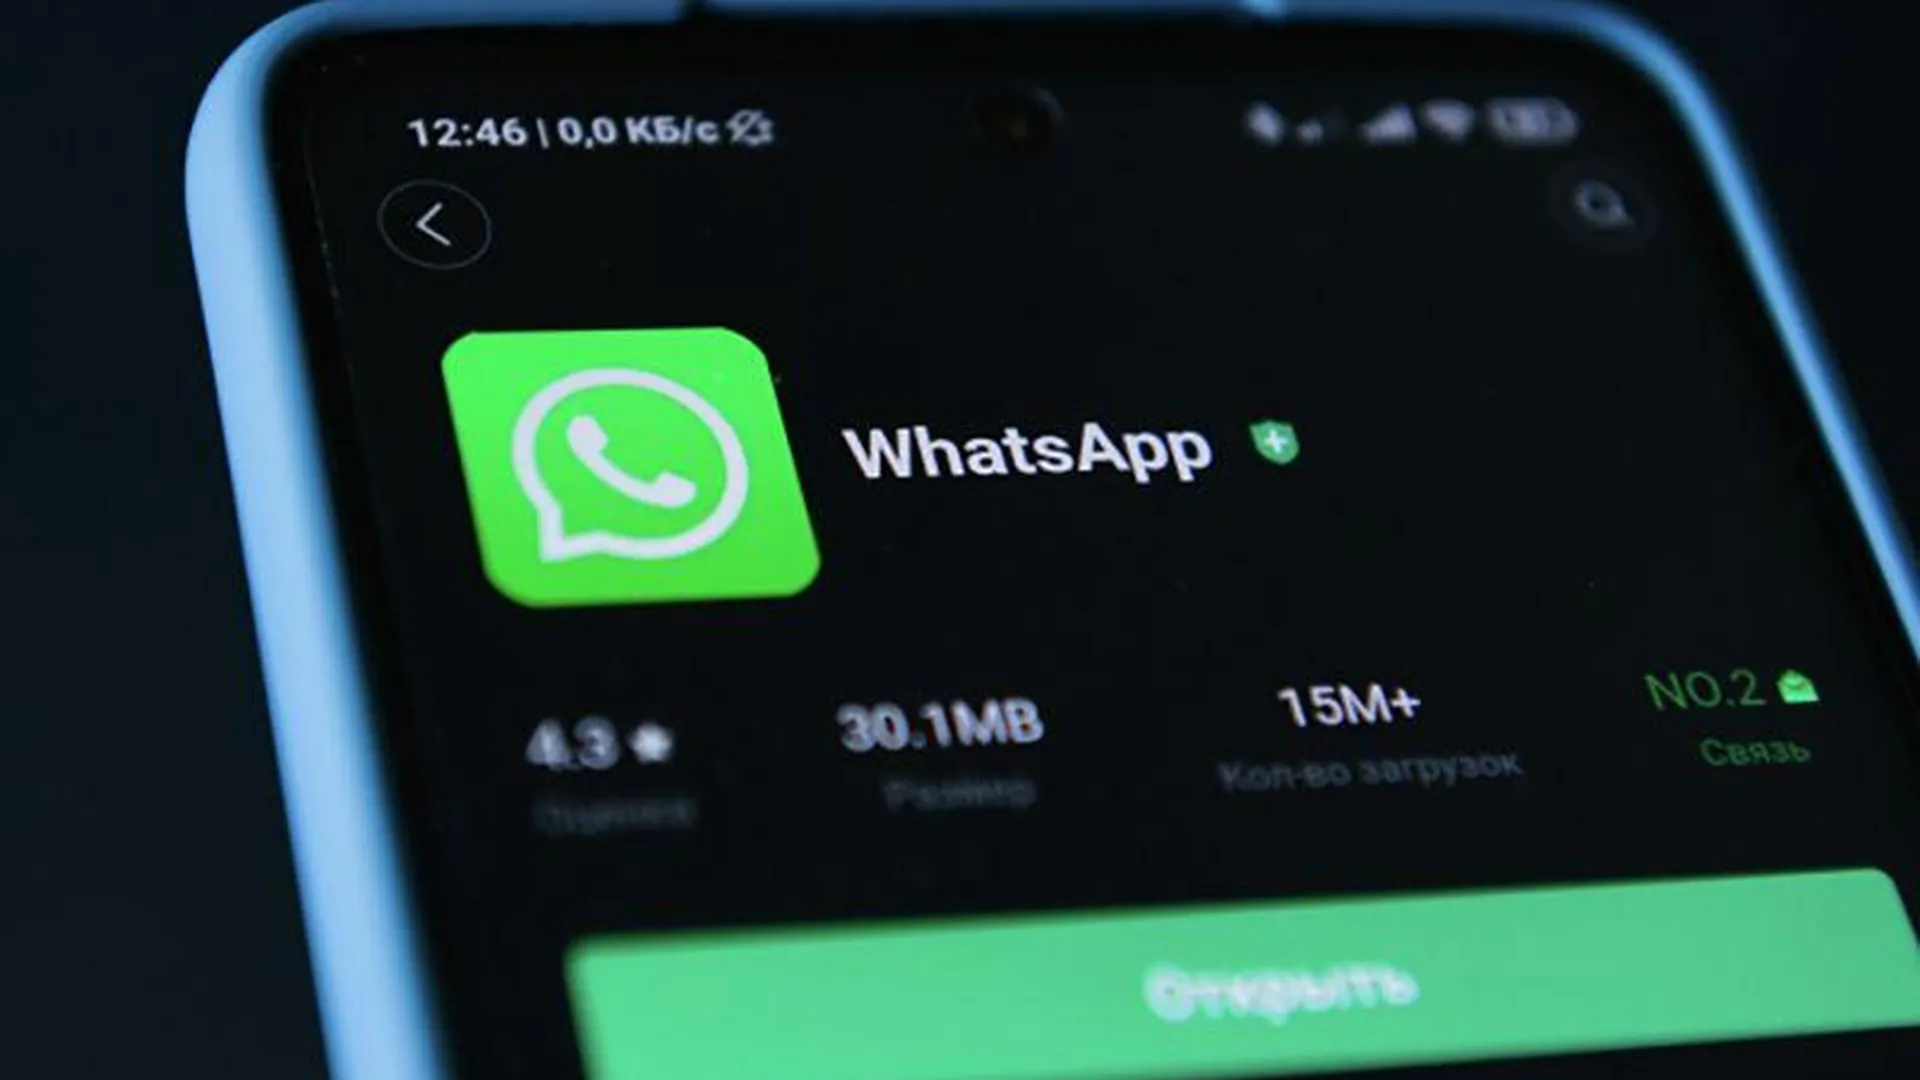 WhatsApp доступен на Android, пока владельцы iPhone негодуют из-за сбоев